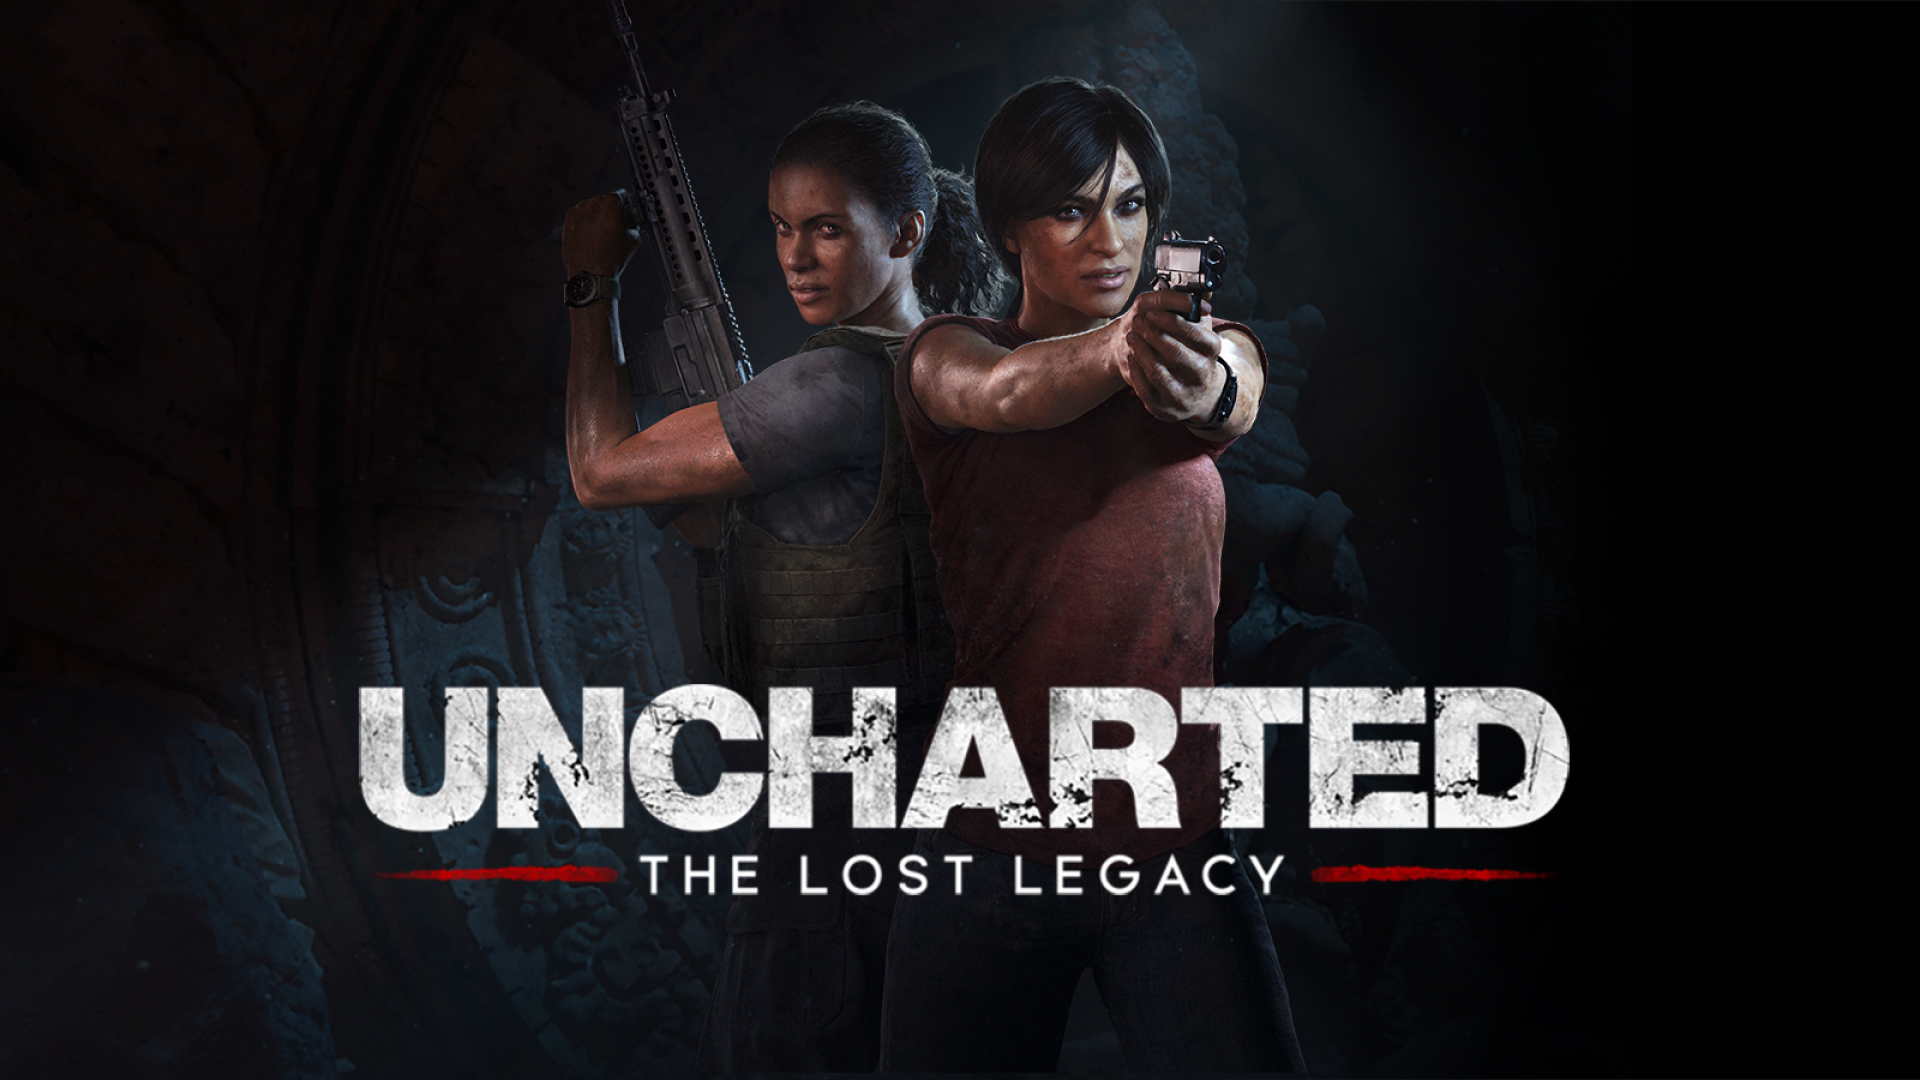 Uncharted lost прохождение. Анчартед 4 наследие. The Lost Legacy. Uncharted 4 и the Lost Legacy Постер. Игра анчартед утраченное наследие.